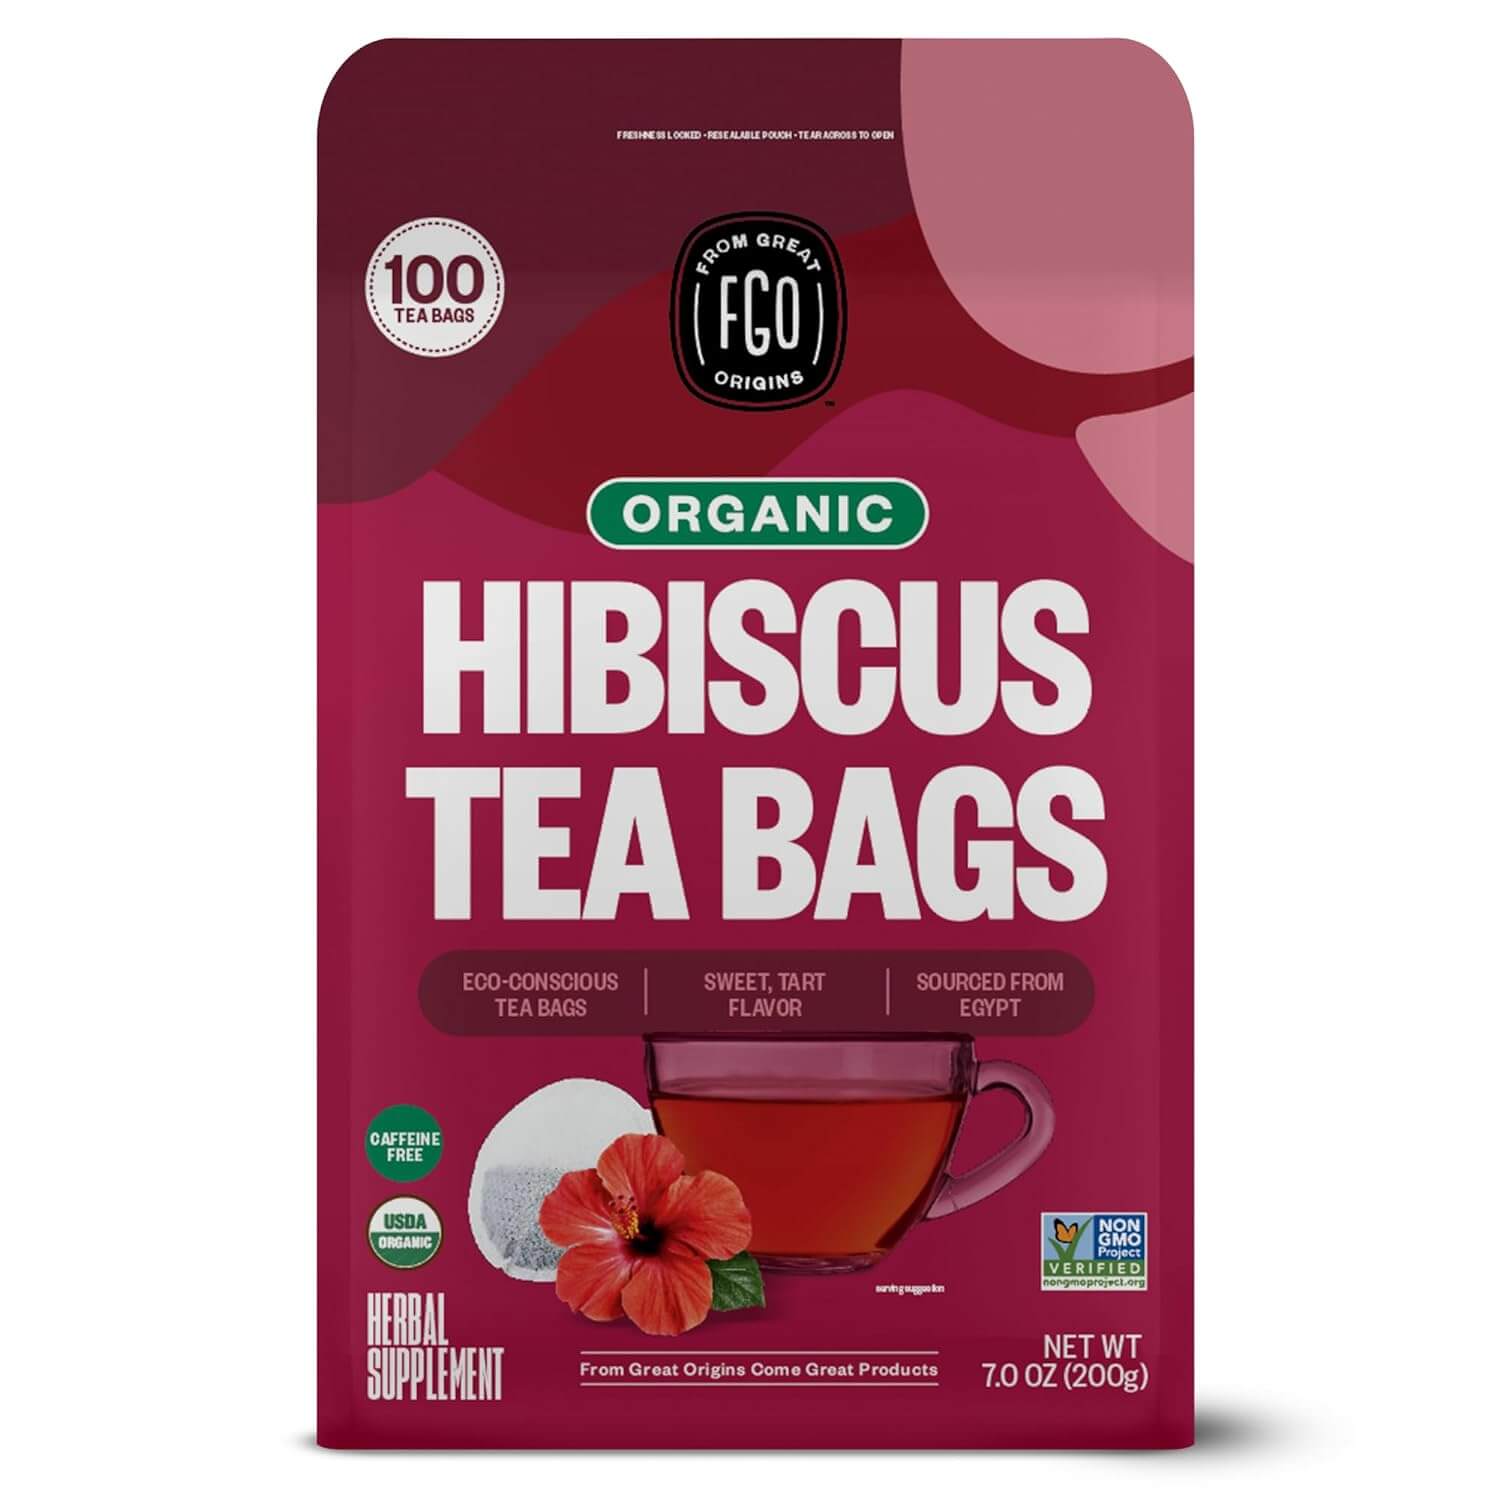 Amazon's Choice for hibiscus tea: FGO Organic Hibiscus Tea